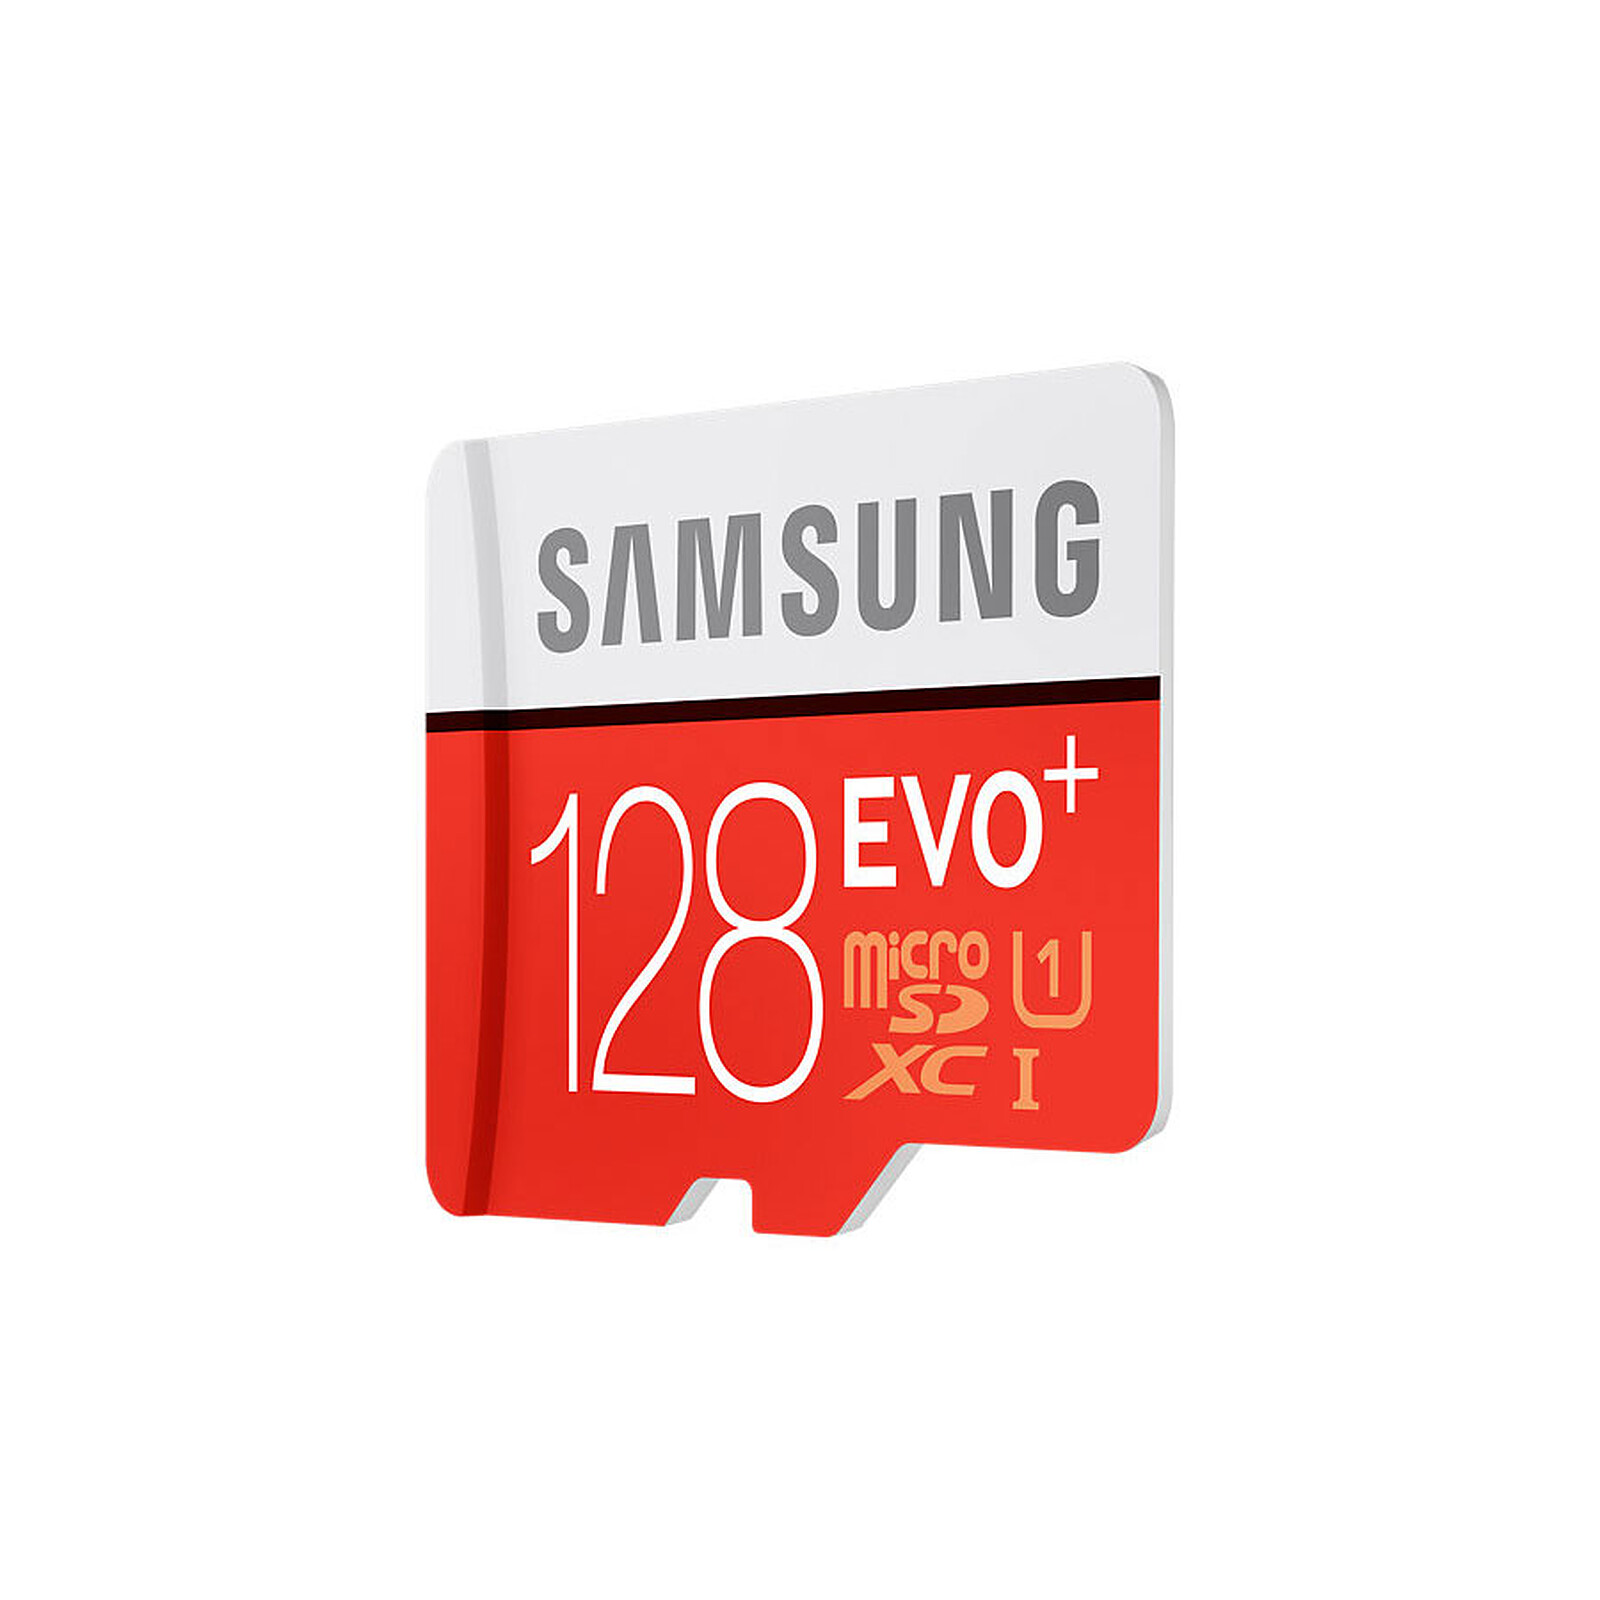 Samsung EVO Plus microSD 128 Go - Carte mémoire - Garantie 3 ans